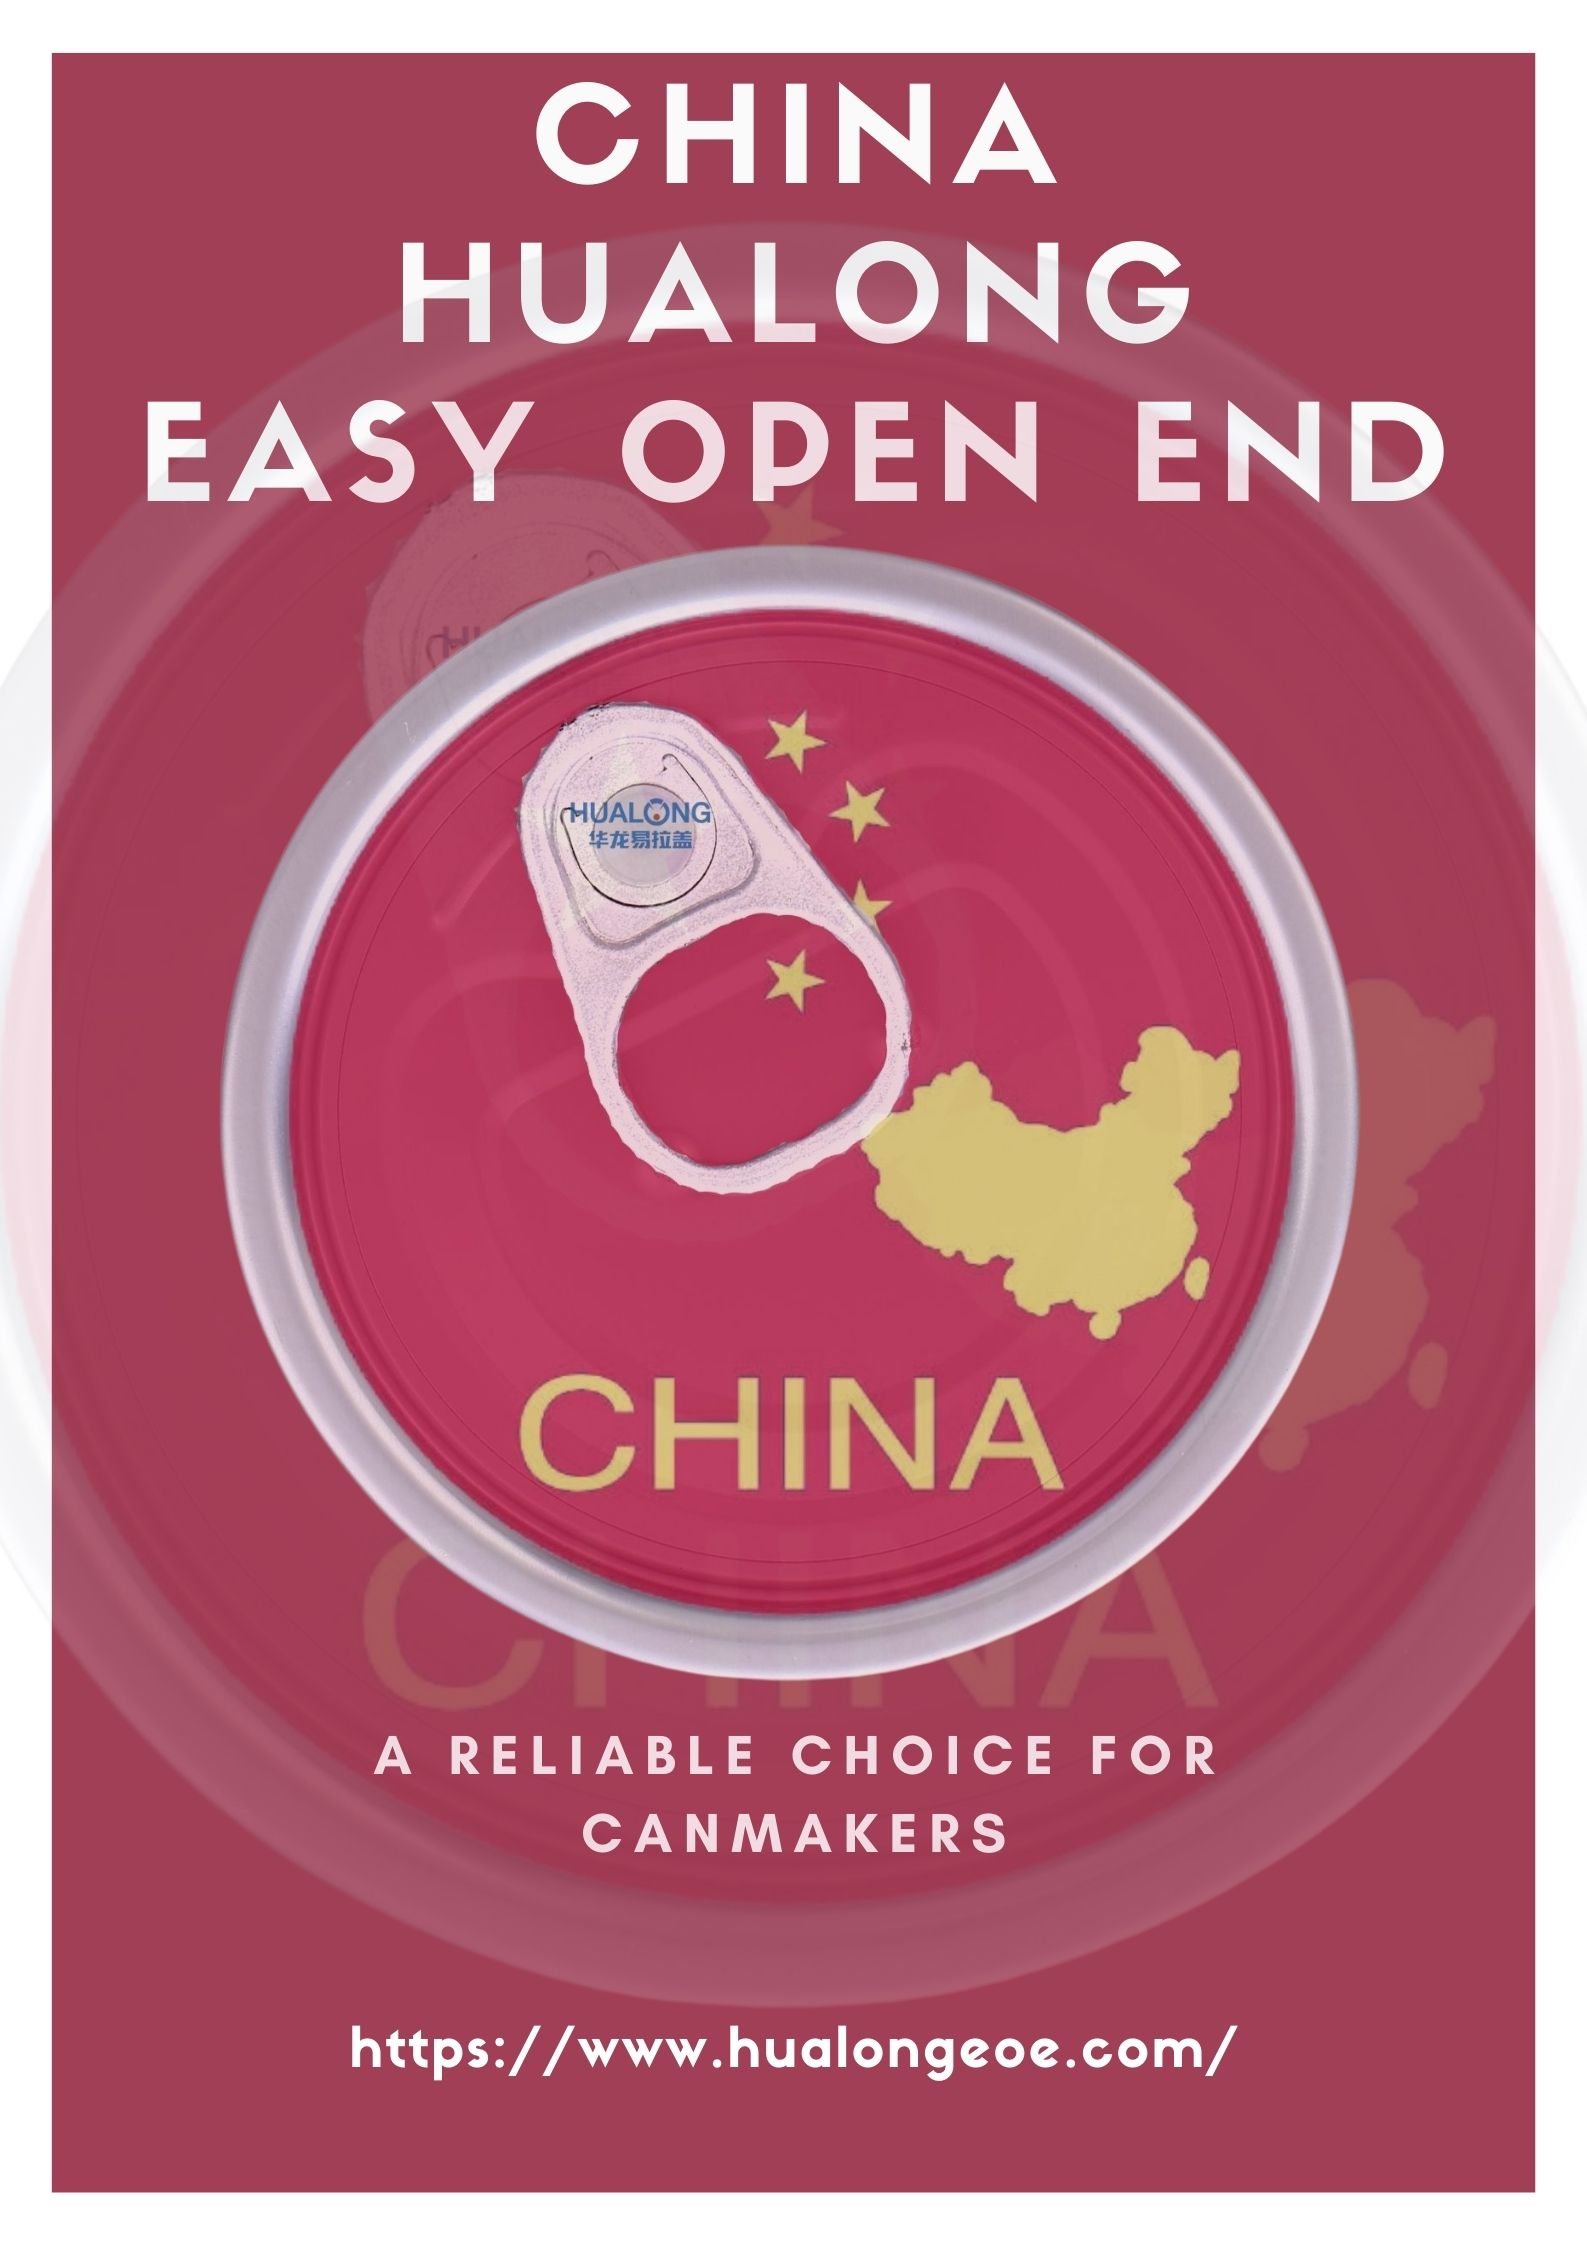 Hualong Easy Open End Canmakers üçün Etibarlı Seçim